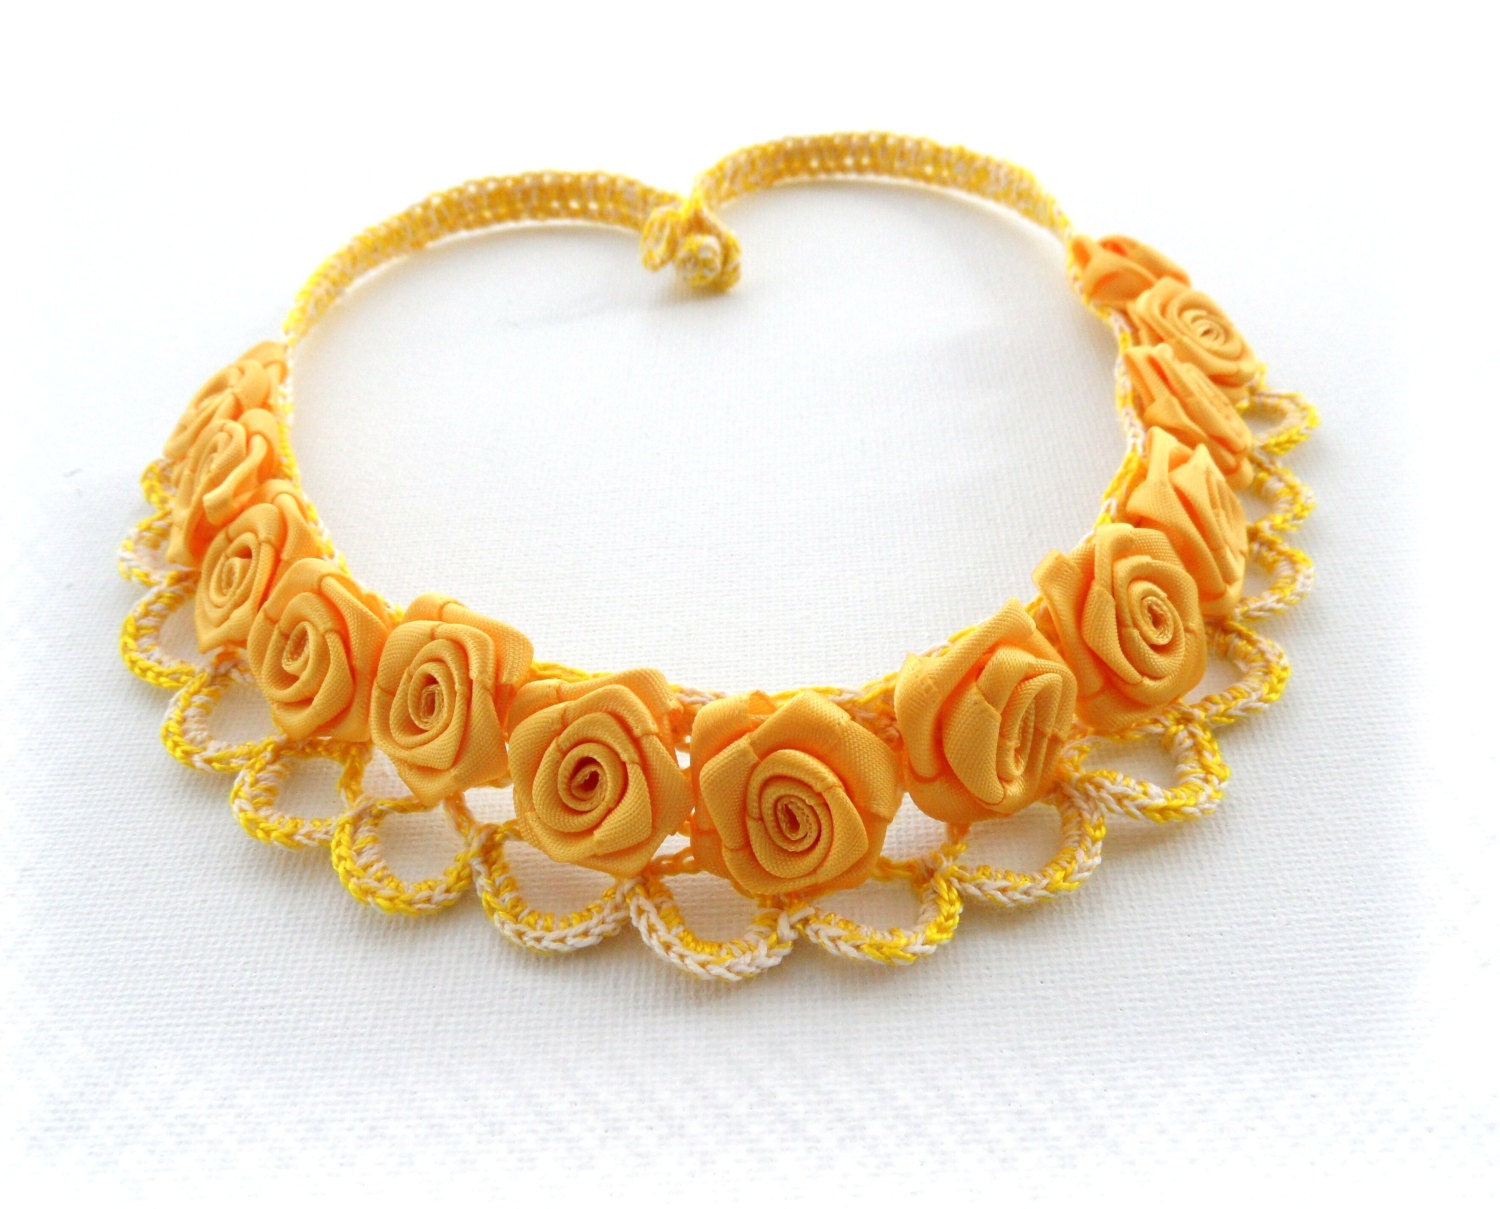 Crochet Necklace - Linen Cotton and Satin Ribbon Yellow Roses Necklace Choker - CraftsbySigita